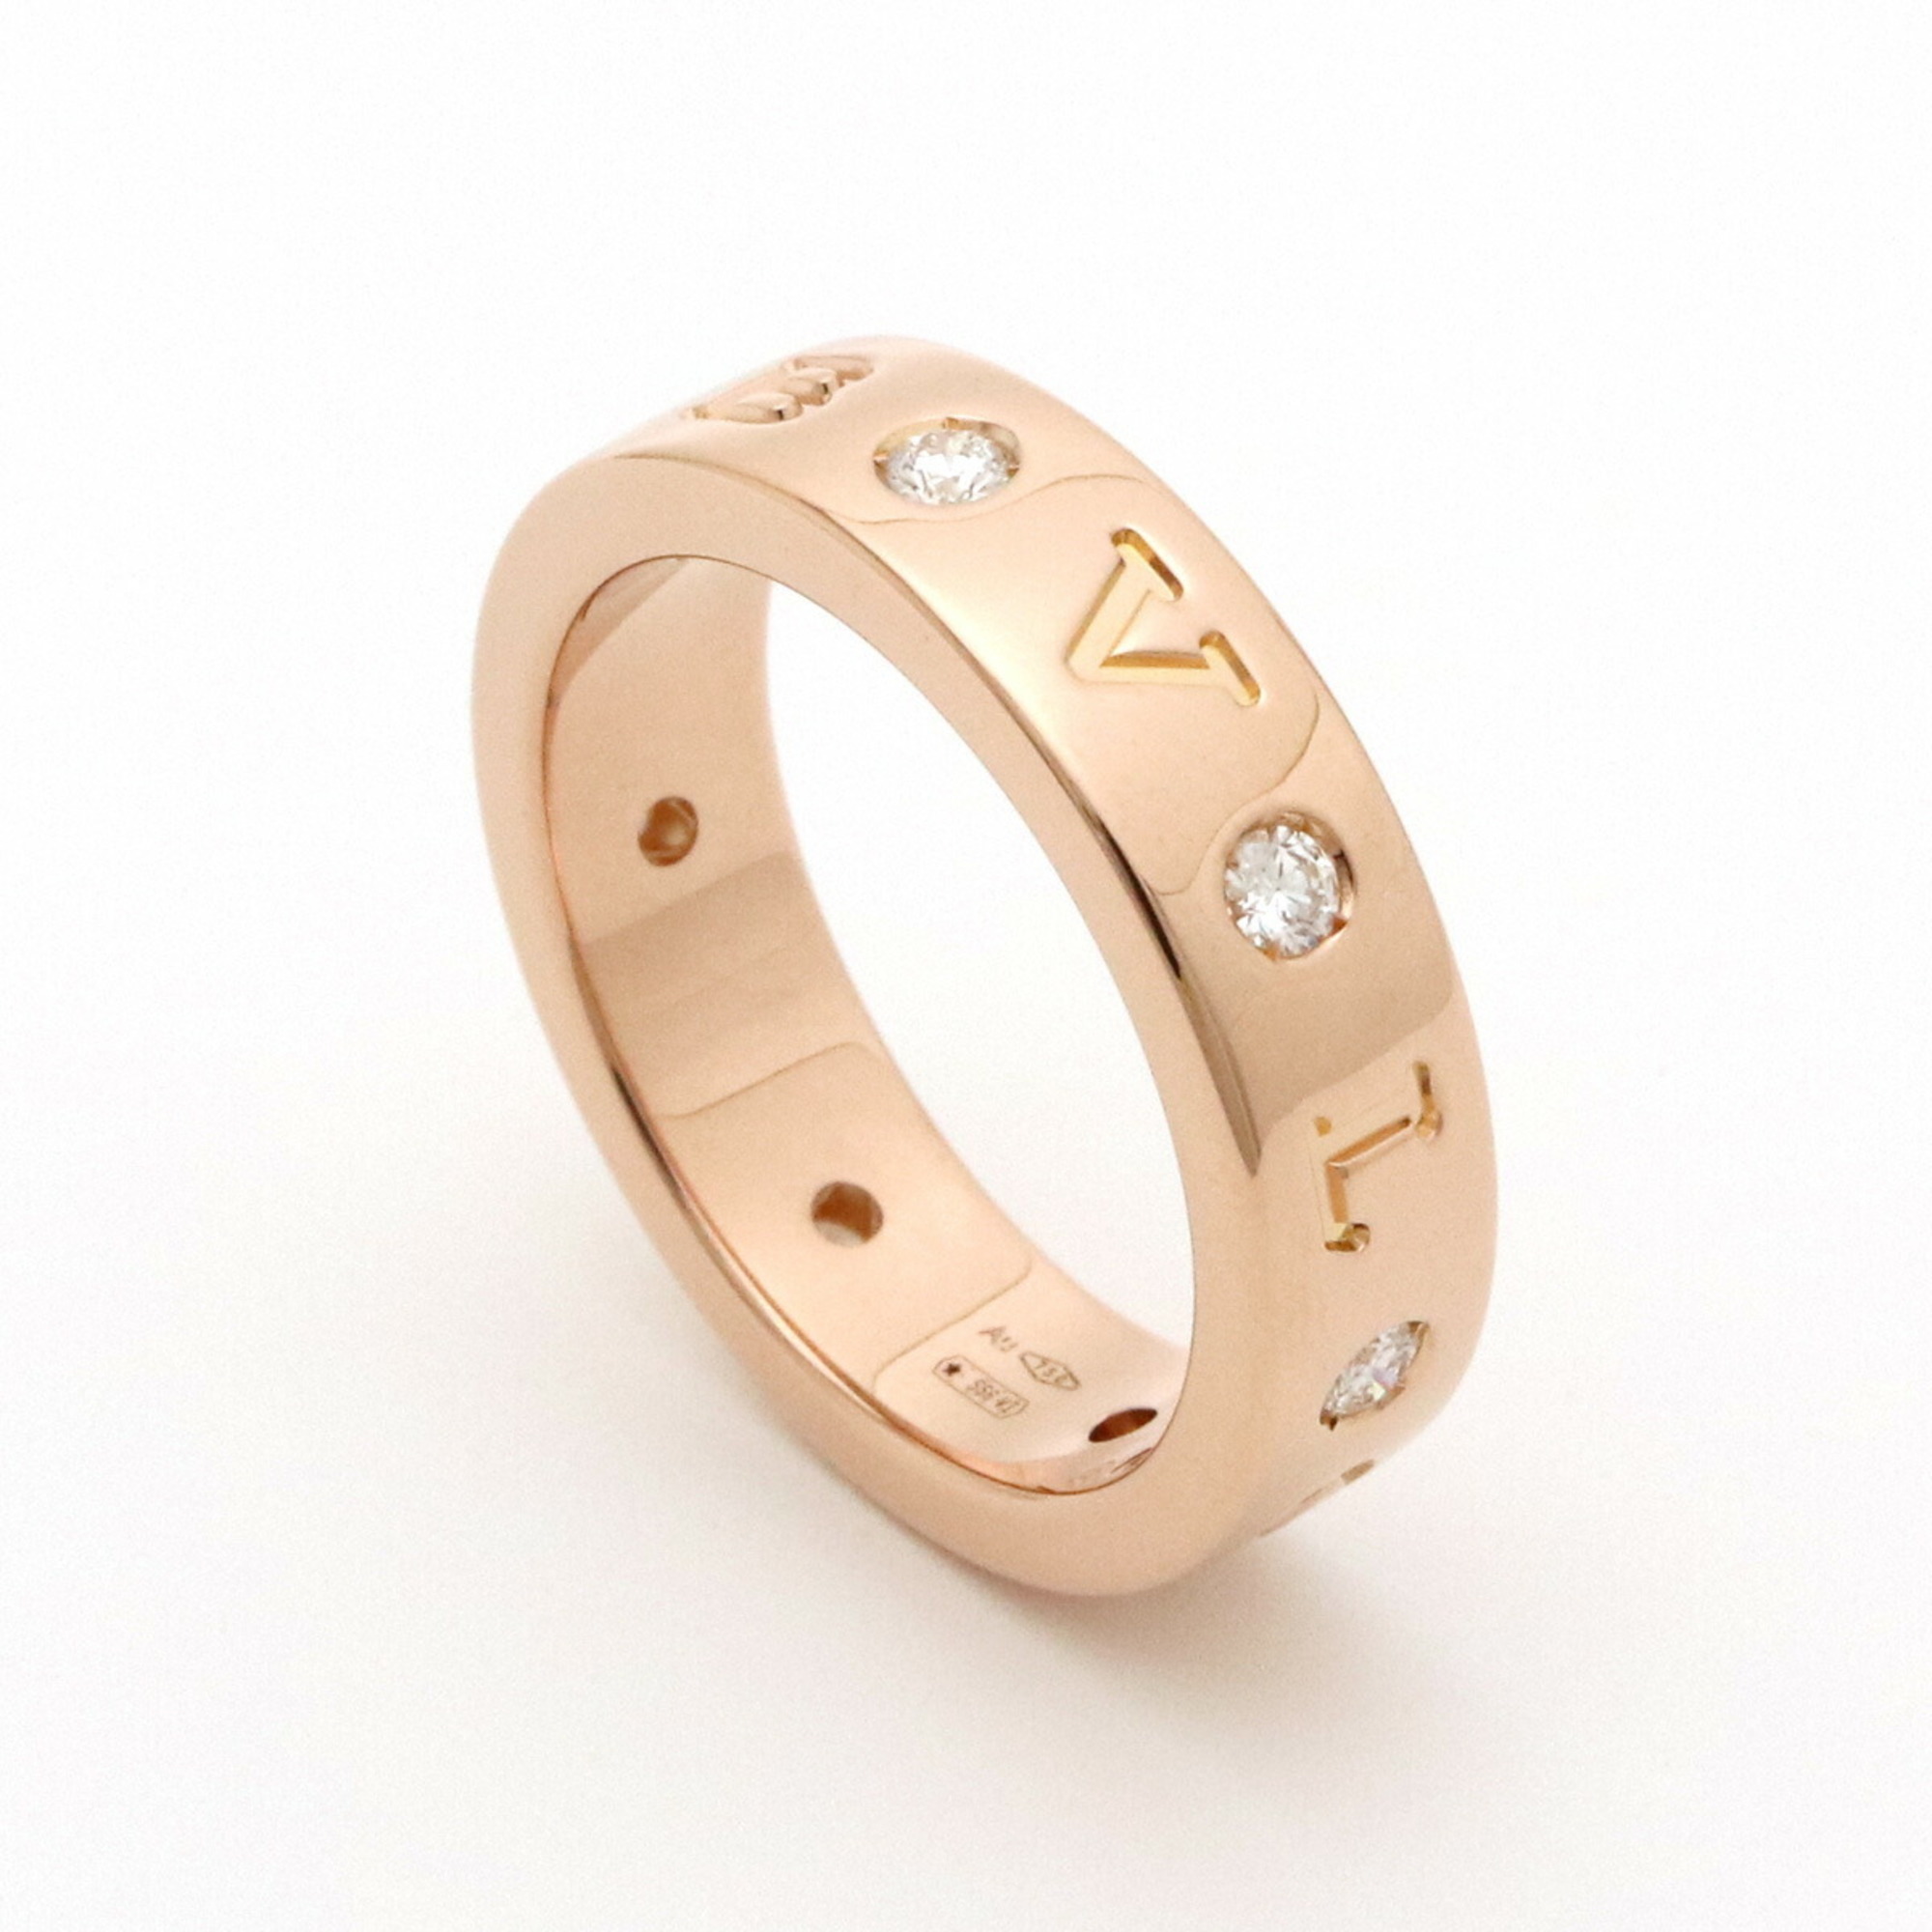 BVLGARI Bulgari Bvlgari Roman Sorbet Ring K18PG Pink Gold Diamond 7PD #51 Daily size approx. 11 353963